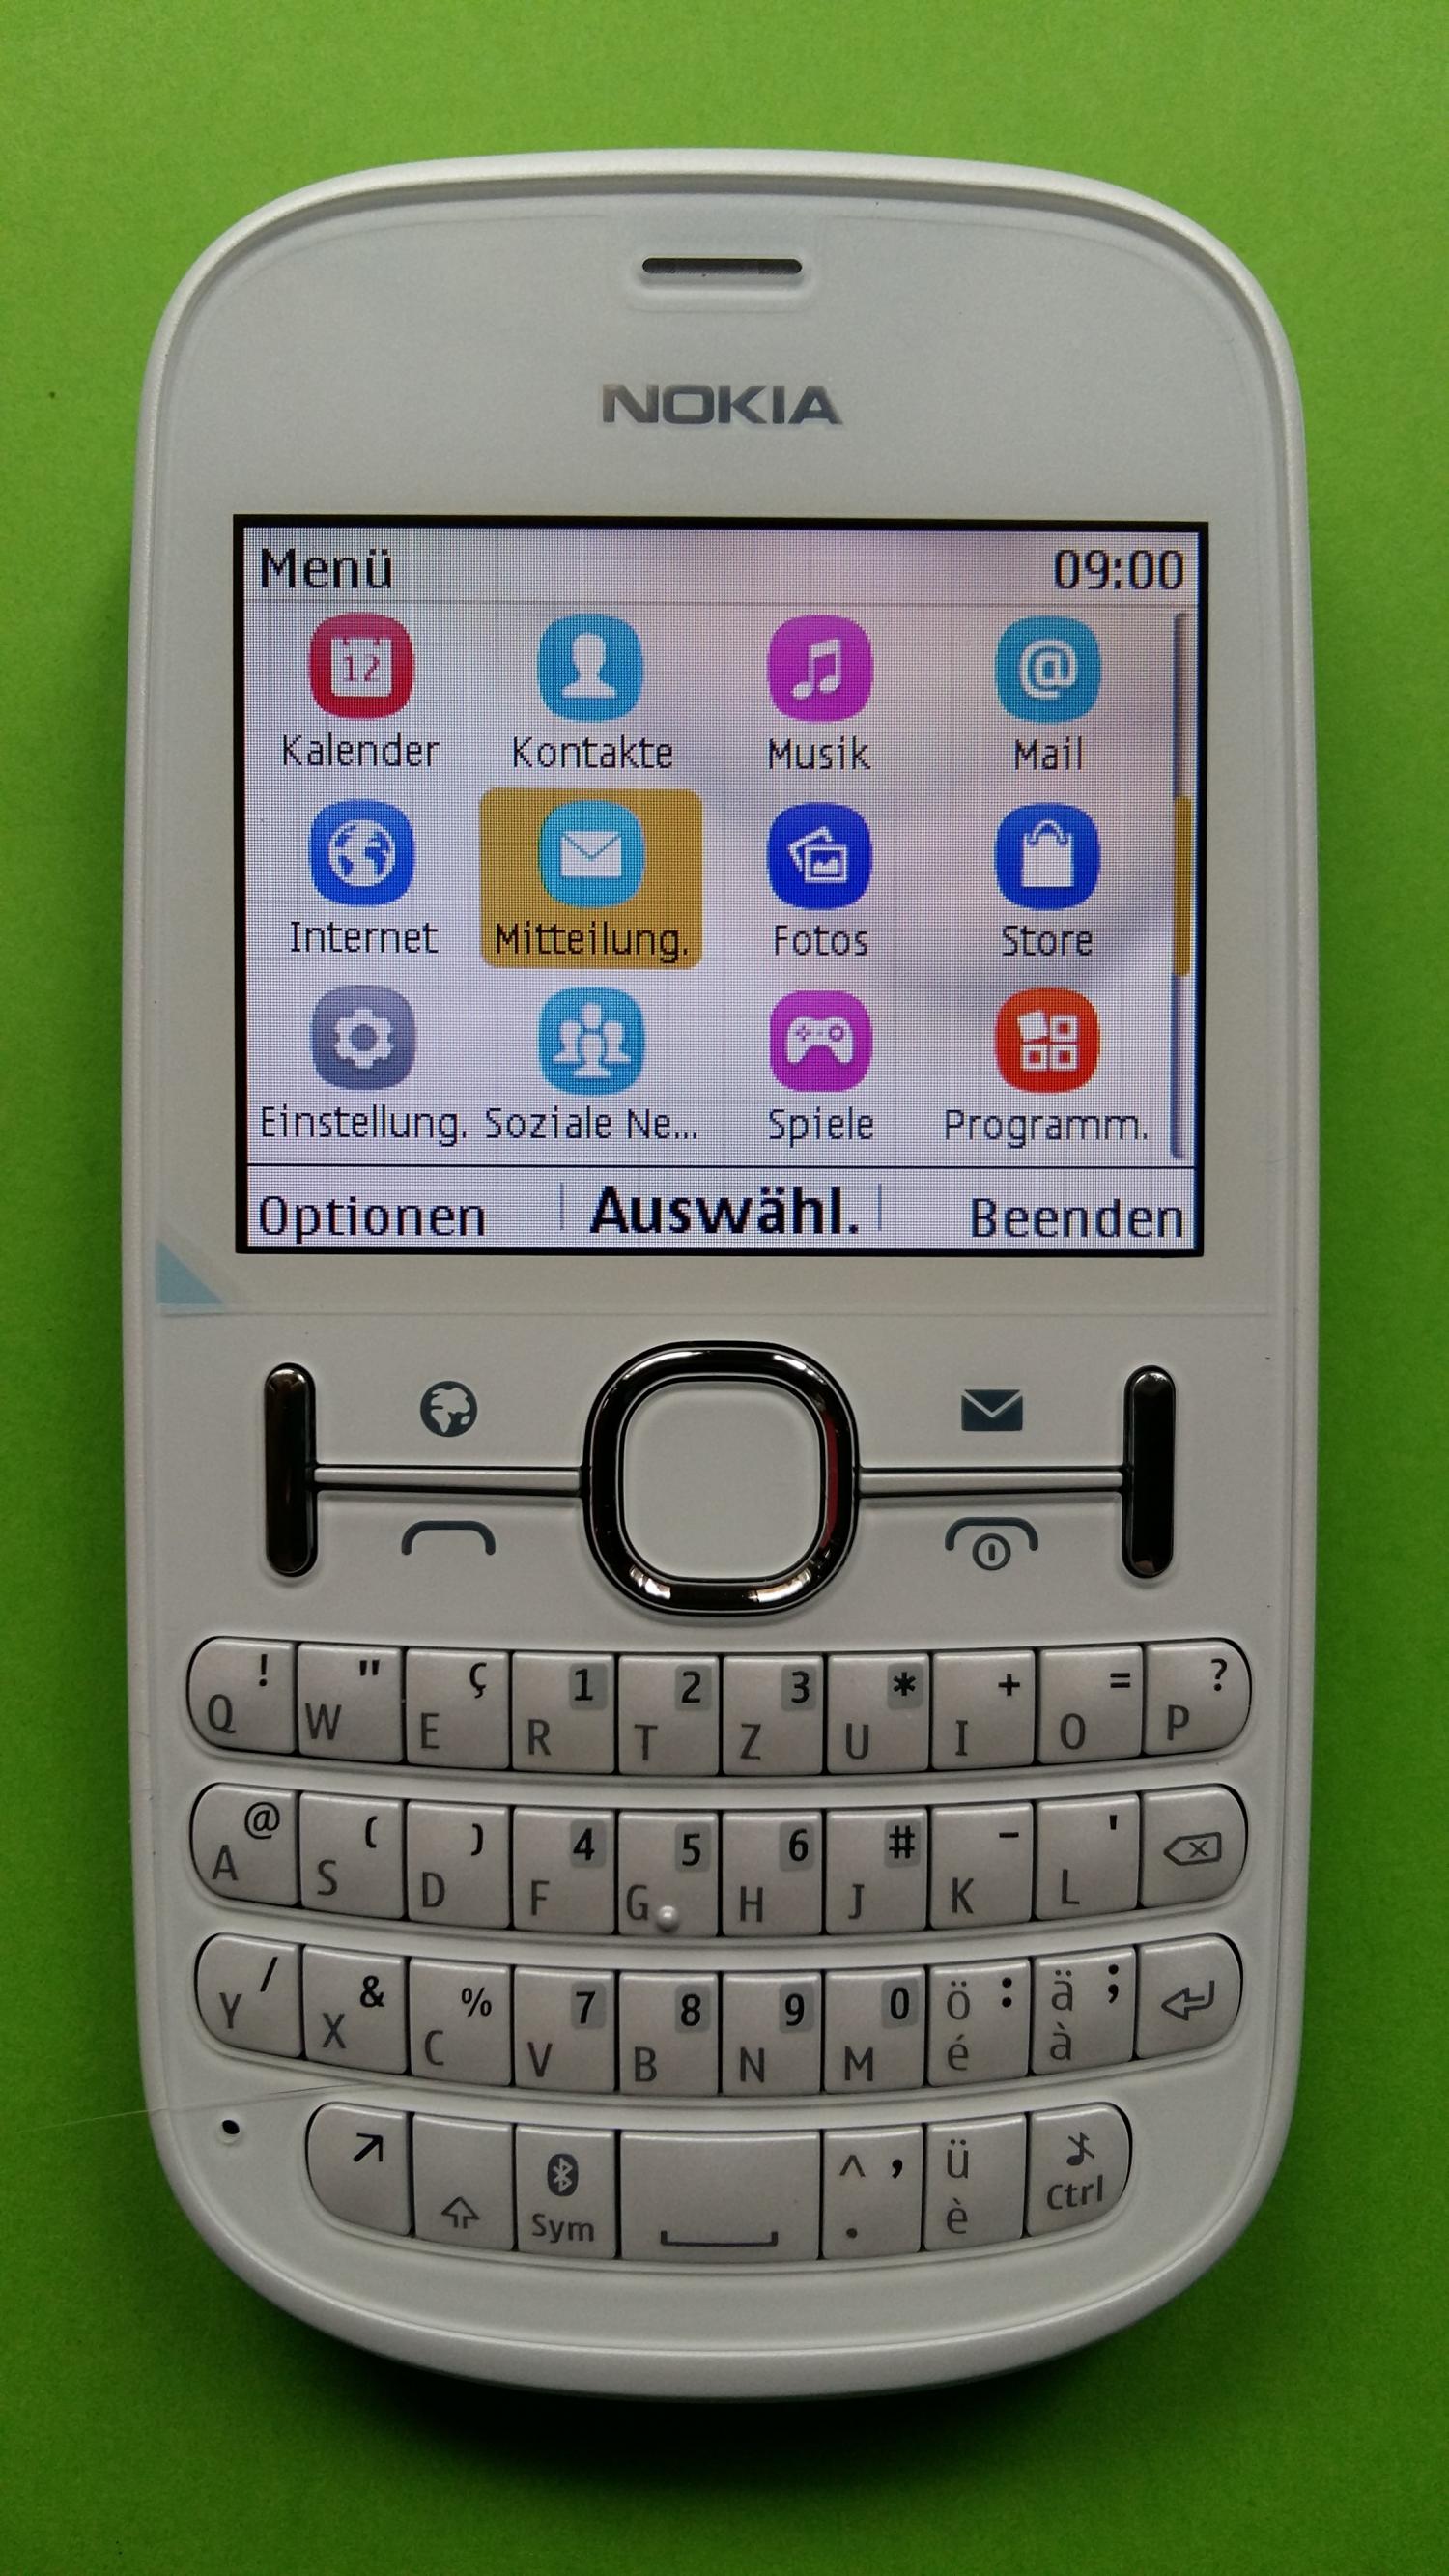 image-7299041-Nokia 201 Asha (3)1.jpg